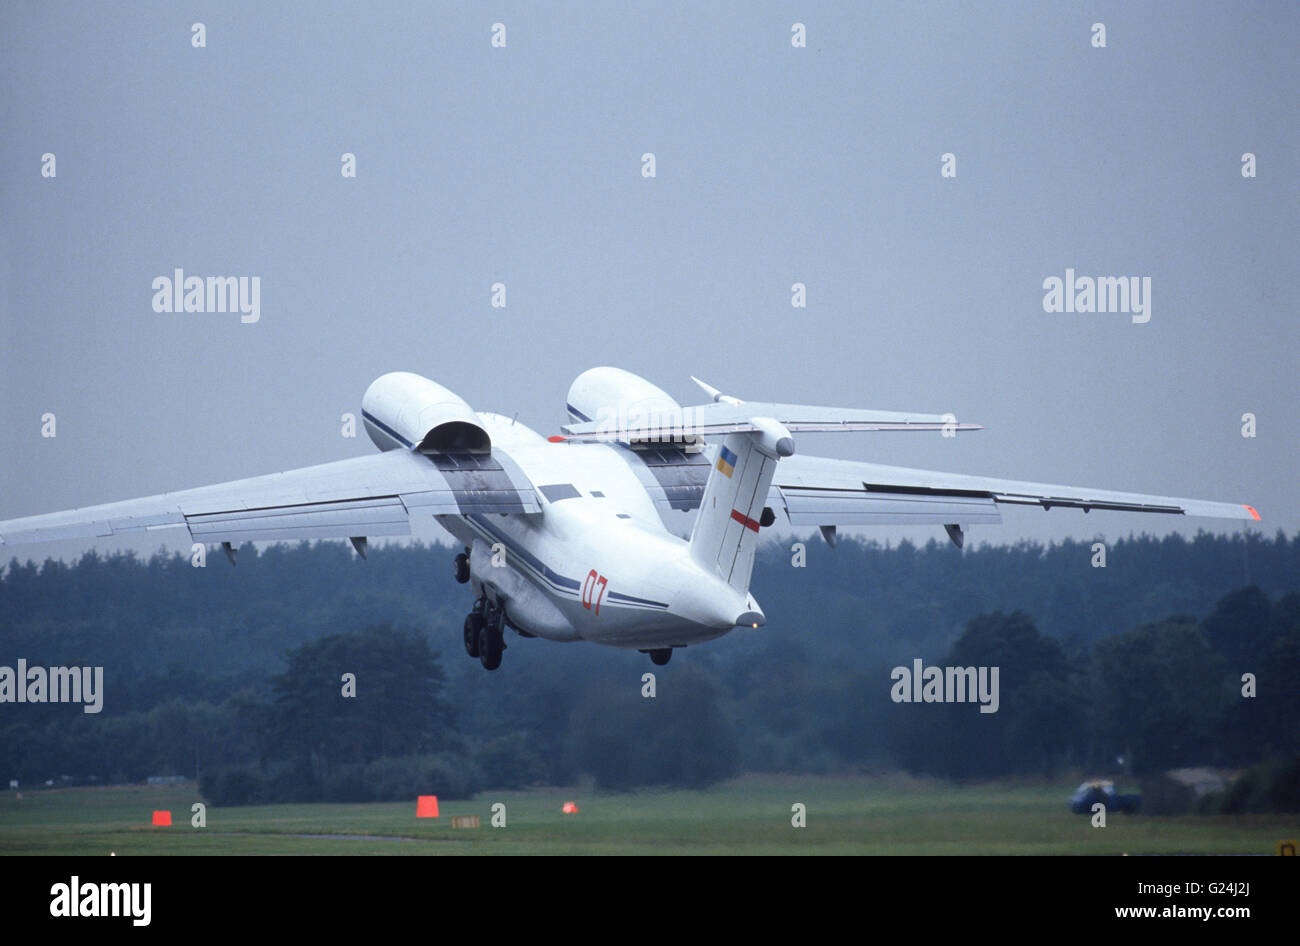 Antonov AN-72 stol transport aircraft Stock Photo